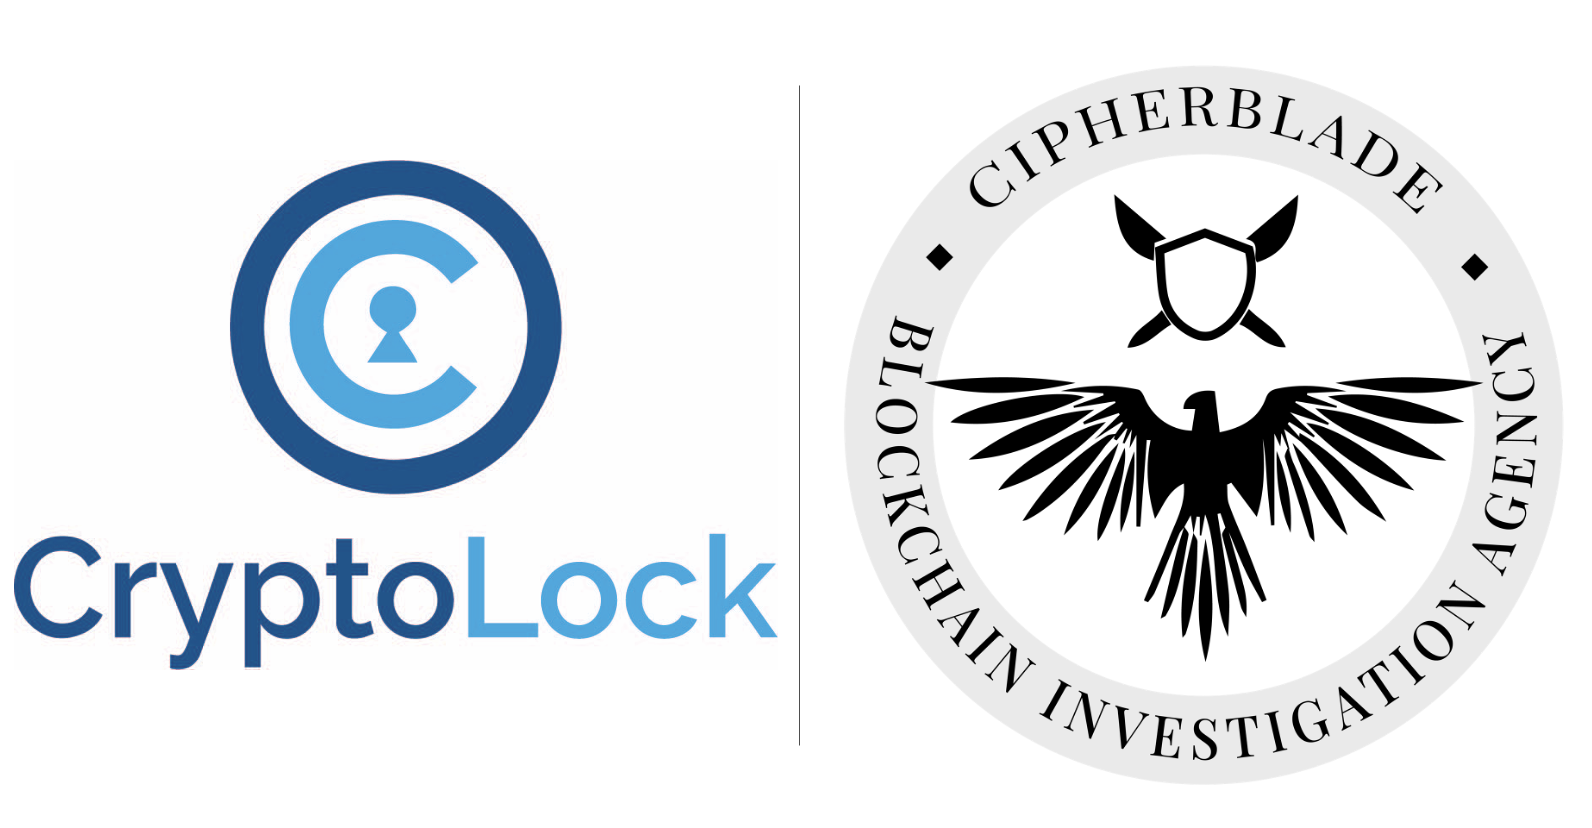 CryptoLock - Cipherblade